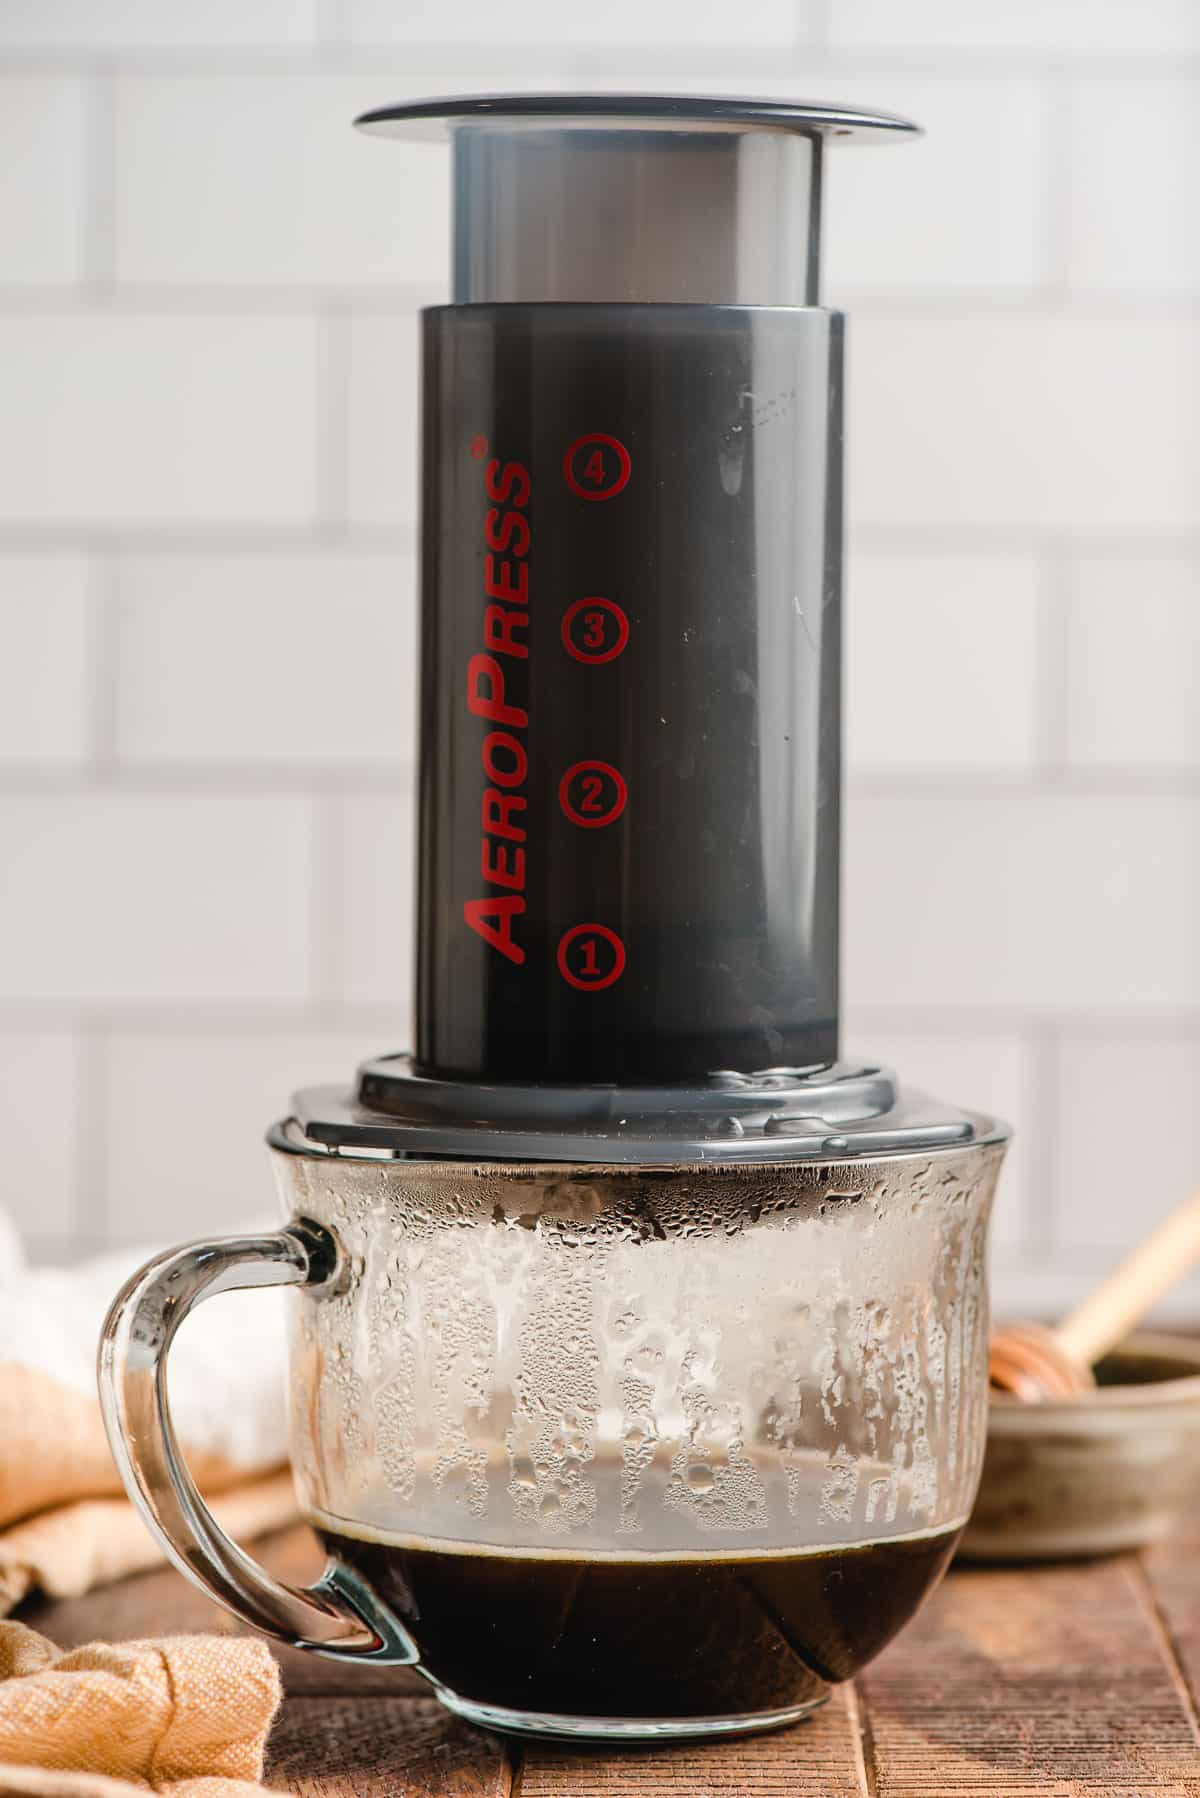 Aeropress pressing coffee into a glass mug.